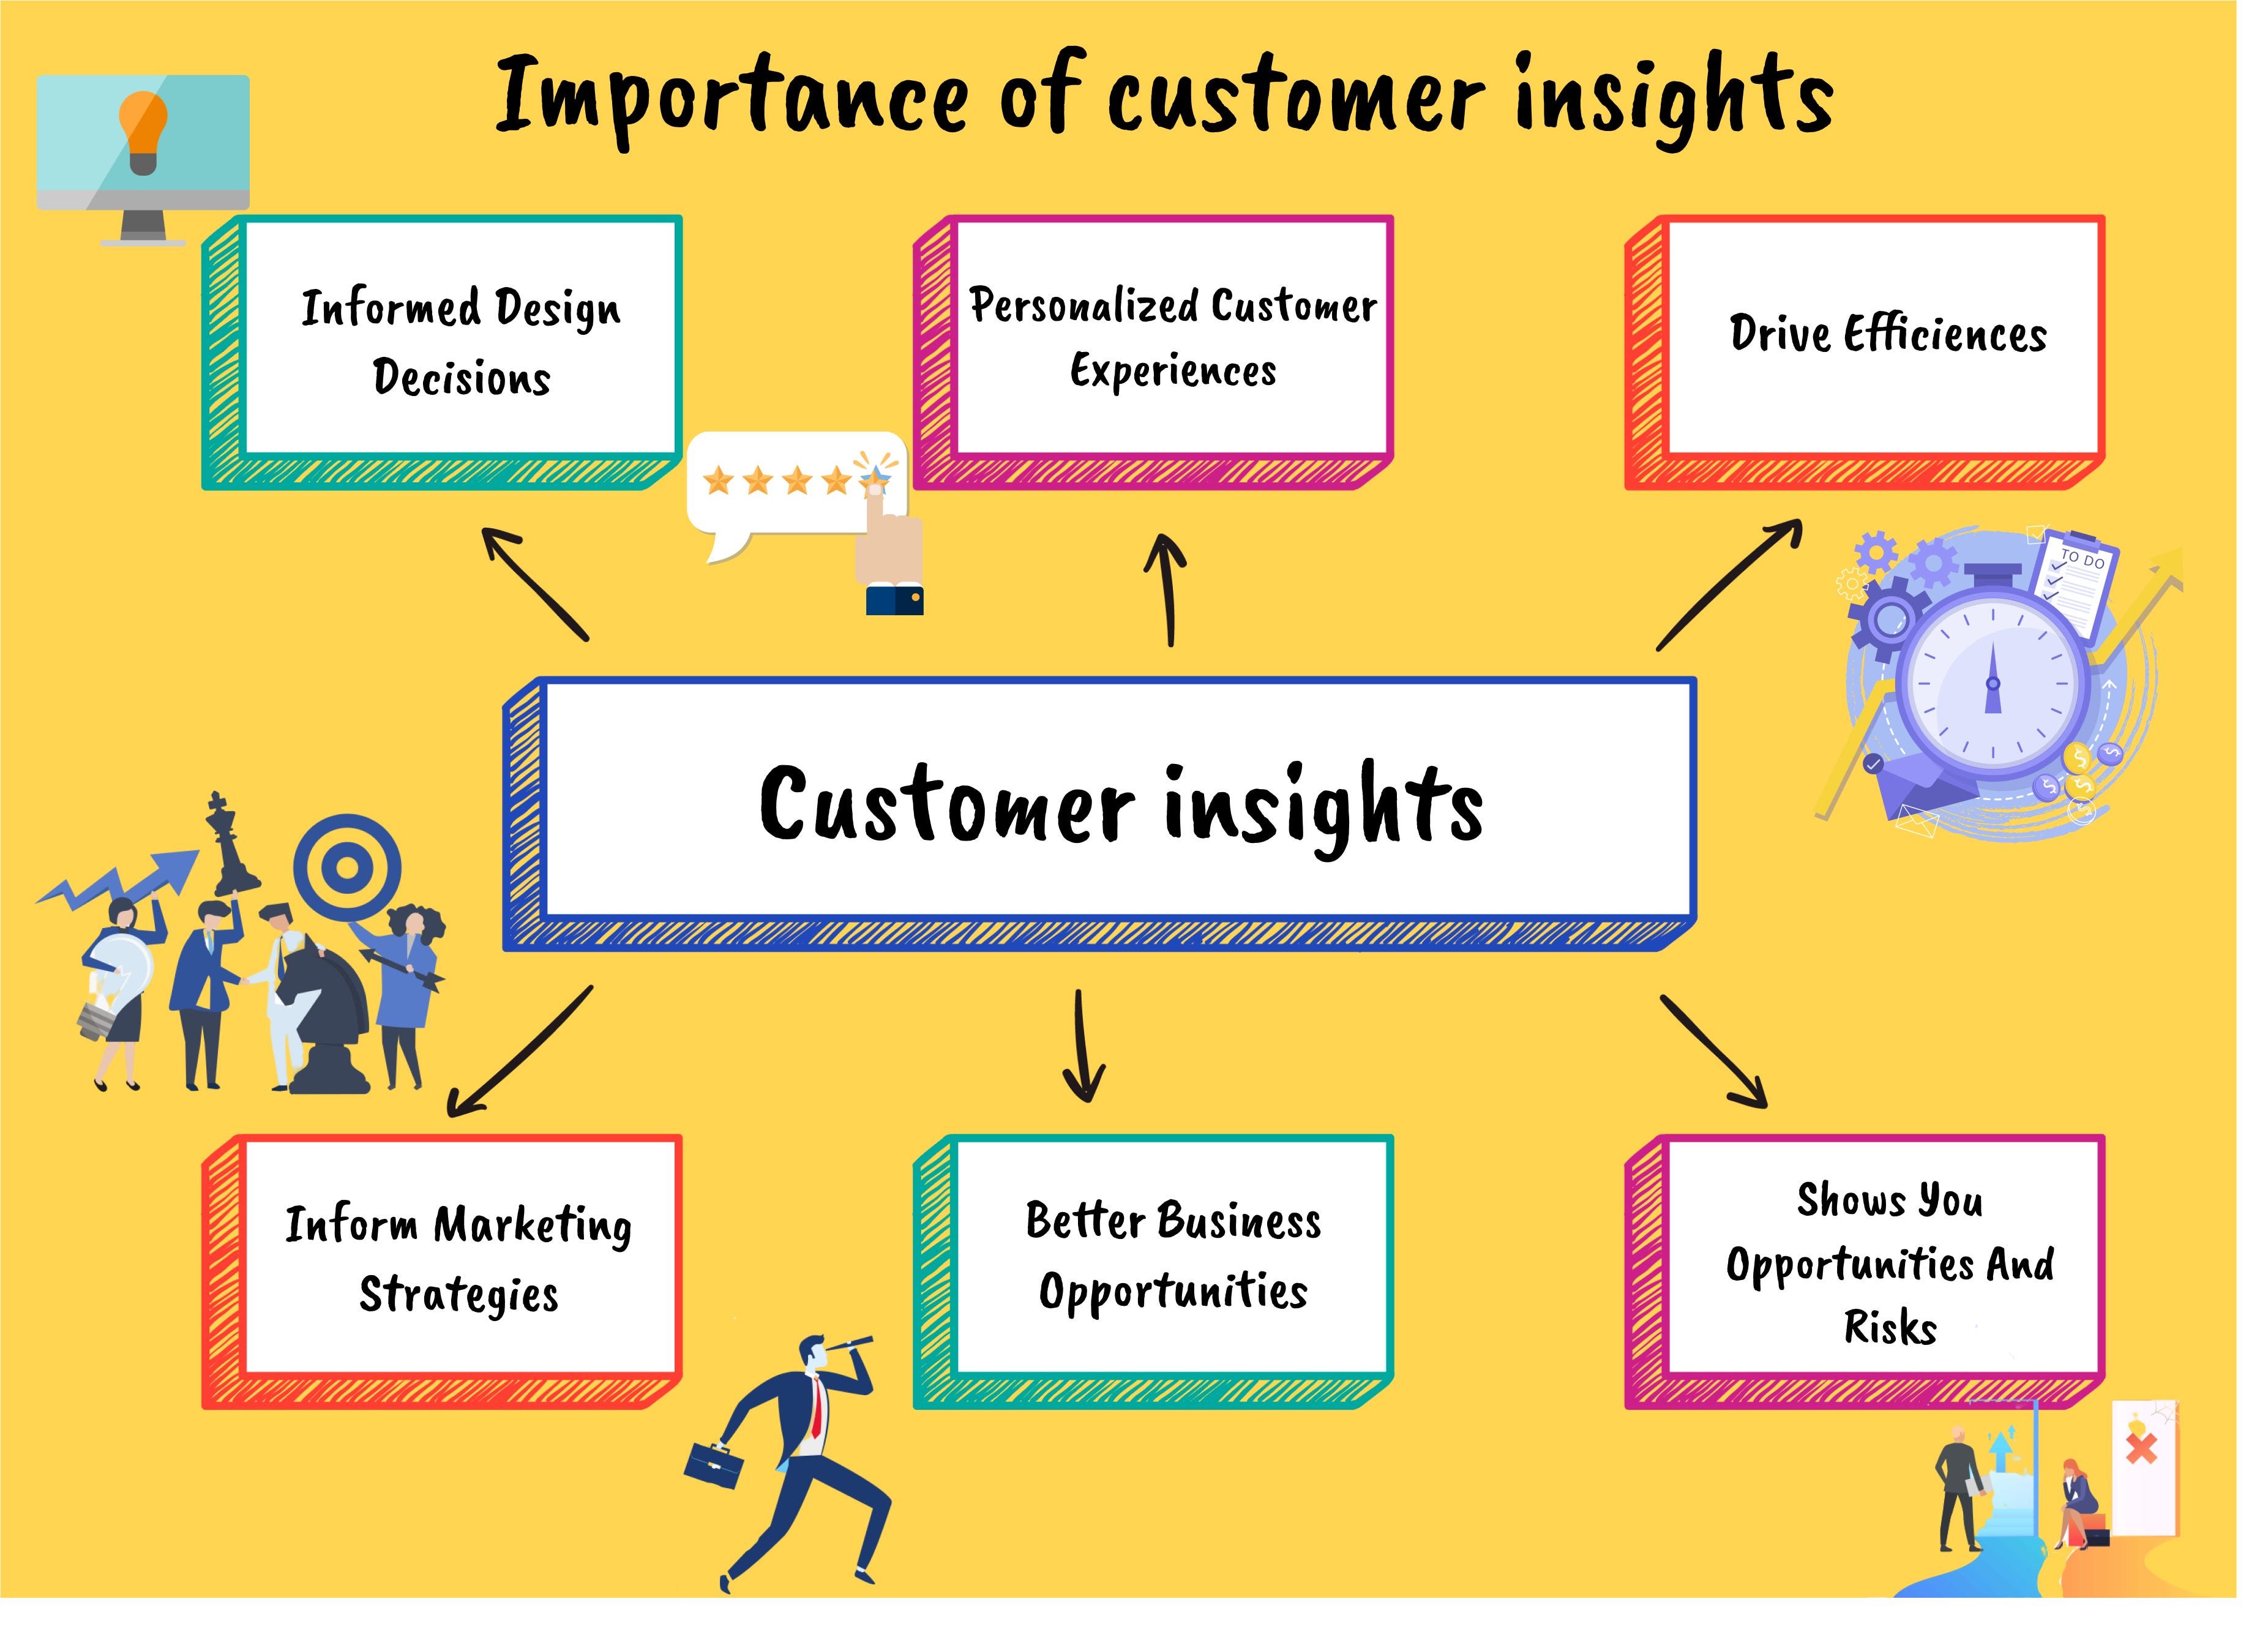 Customer Insights benefits